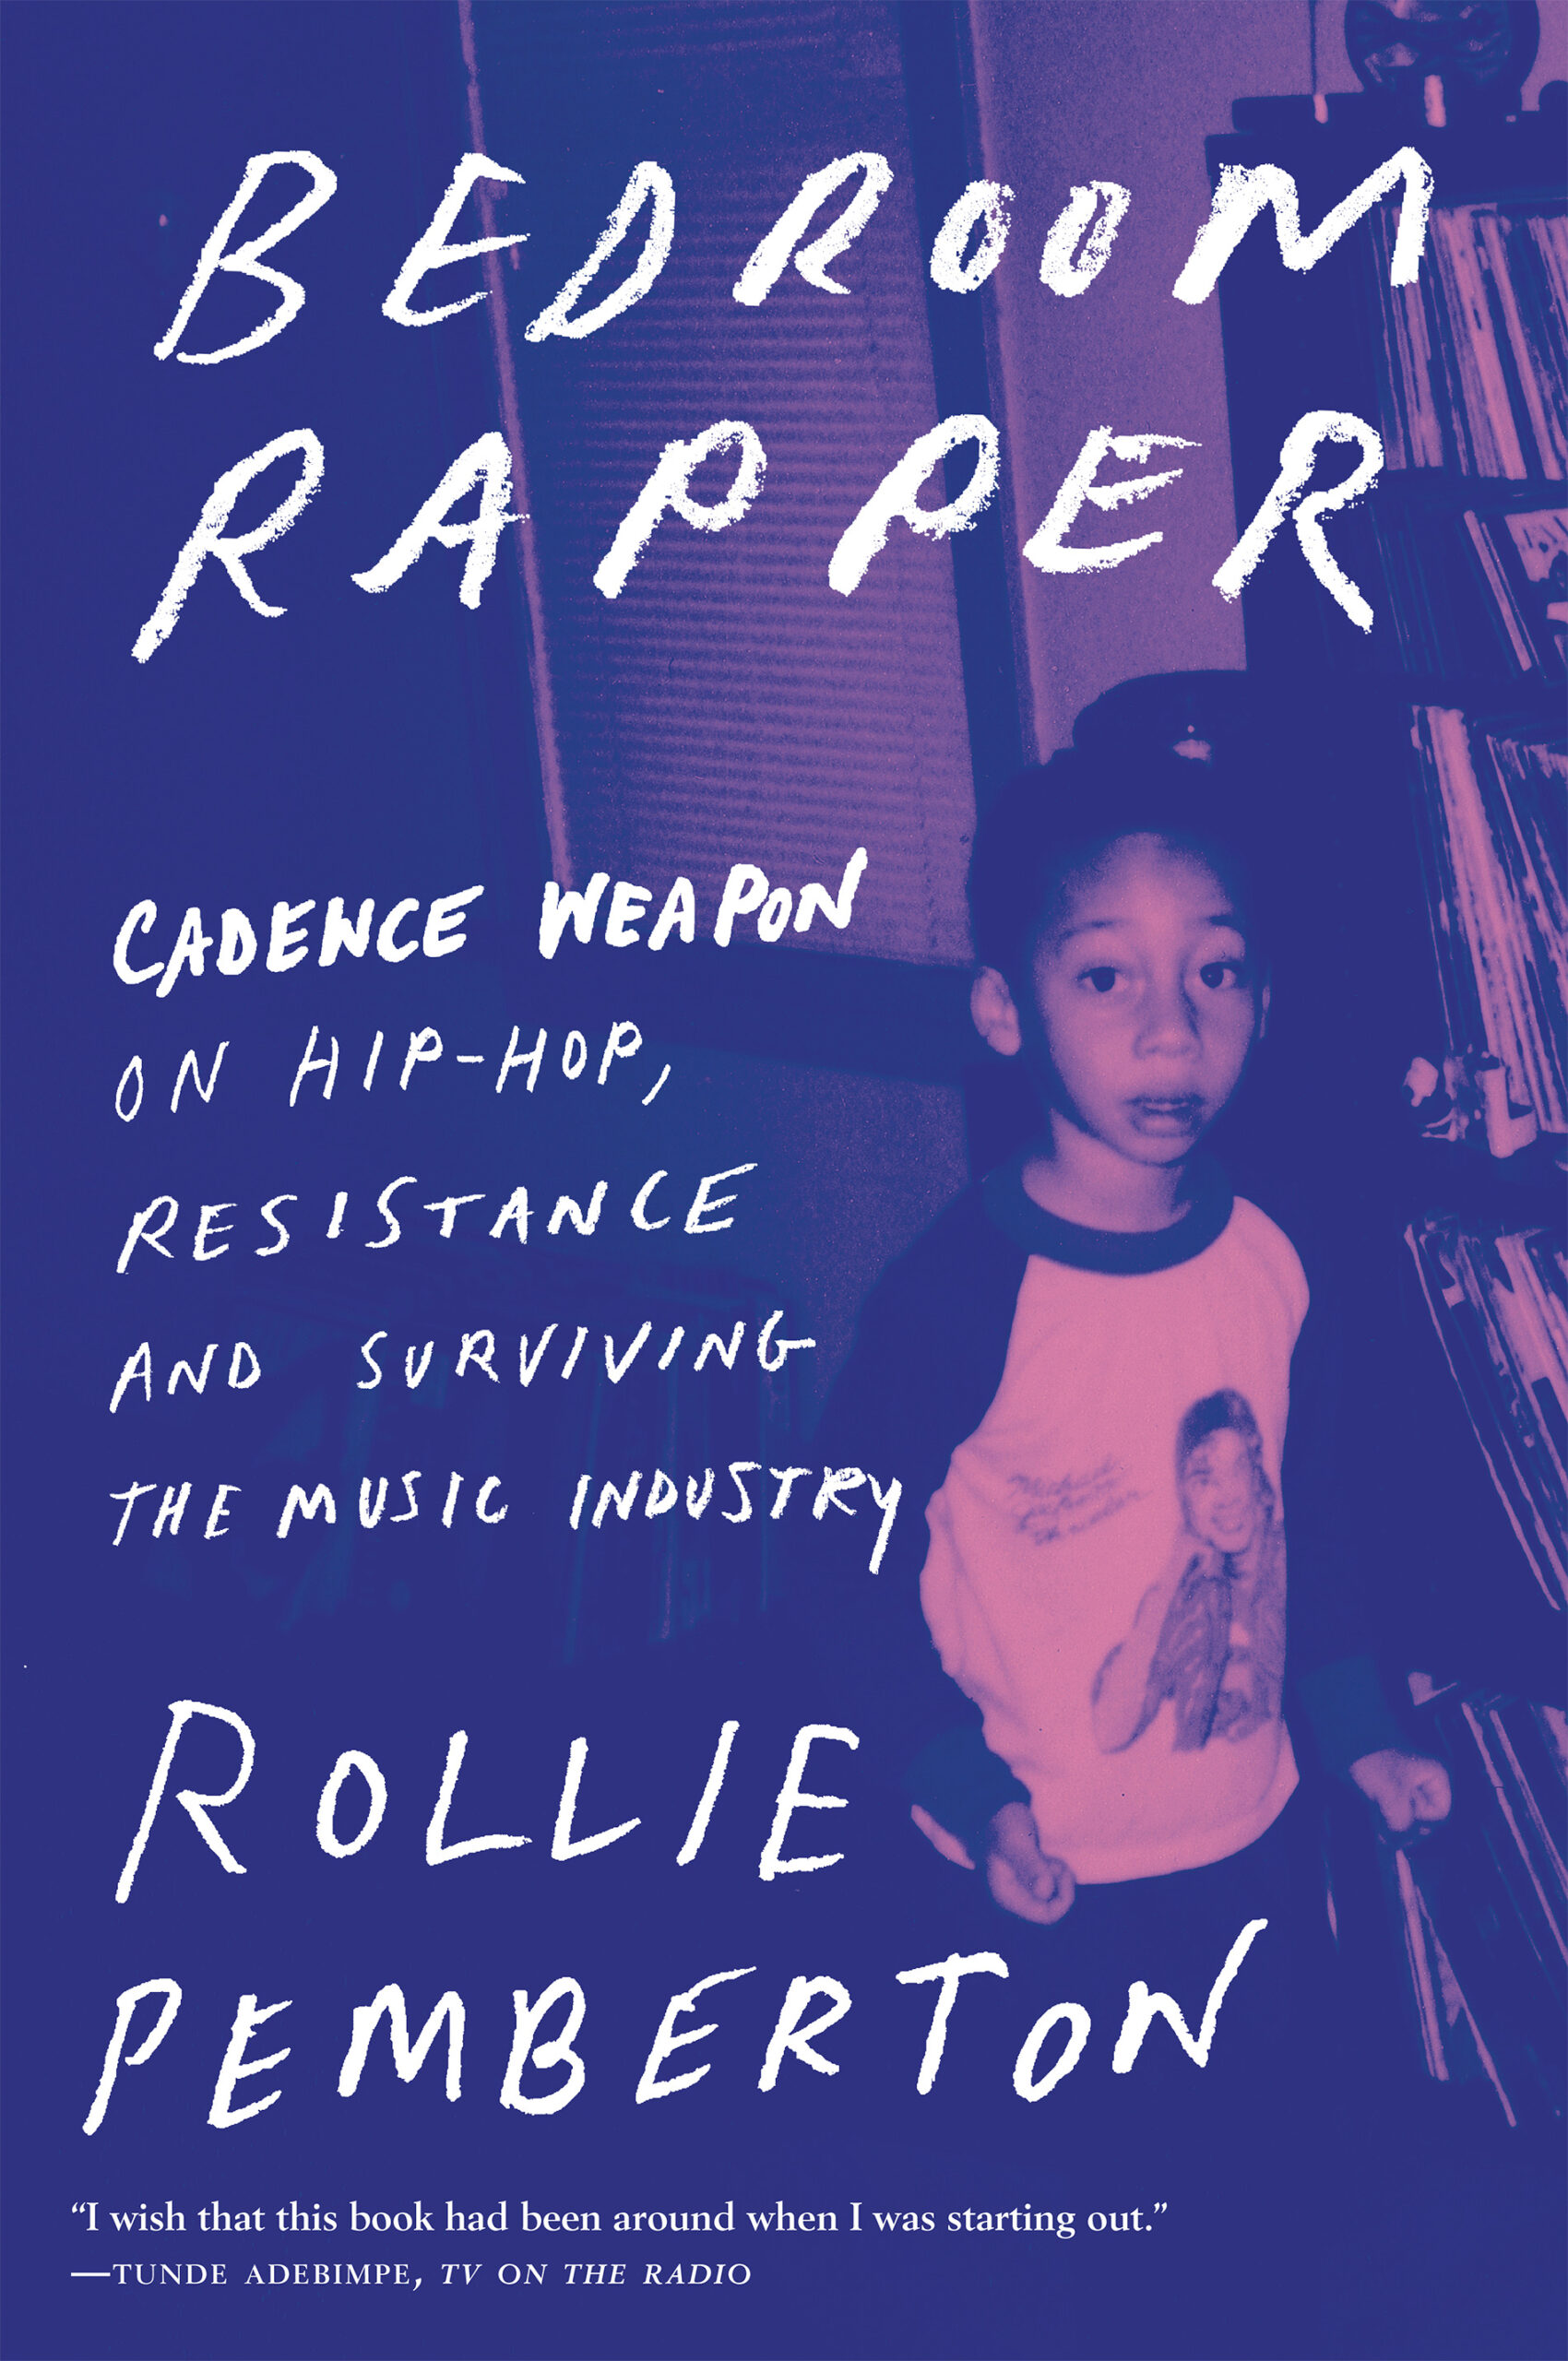 Rollie Pemberton's Bedroom Rapper book cover